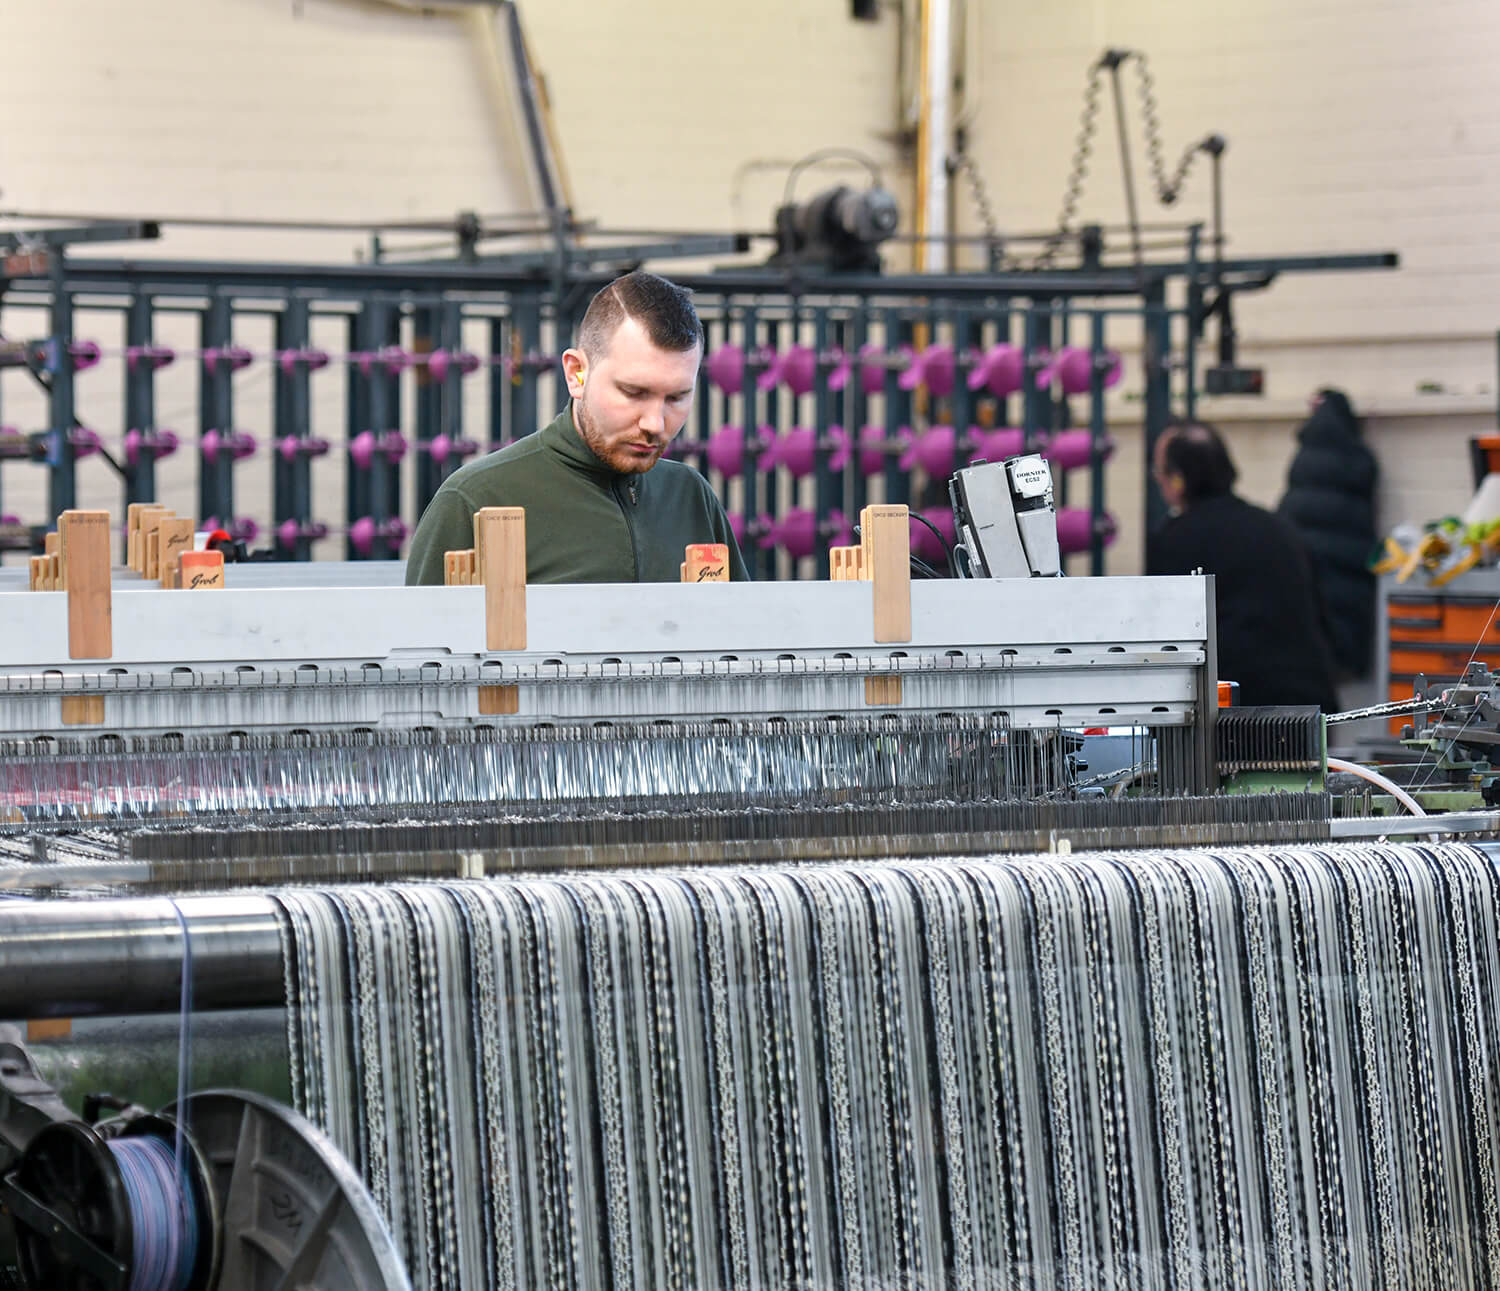 Man working at the Linton Tweed factory in Carlisle